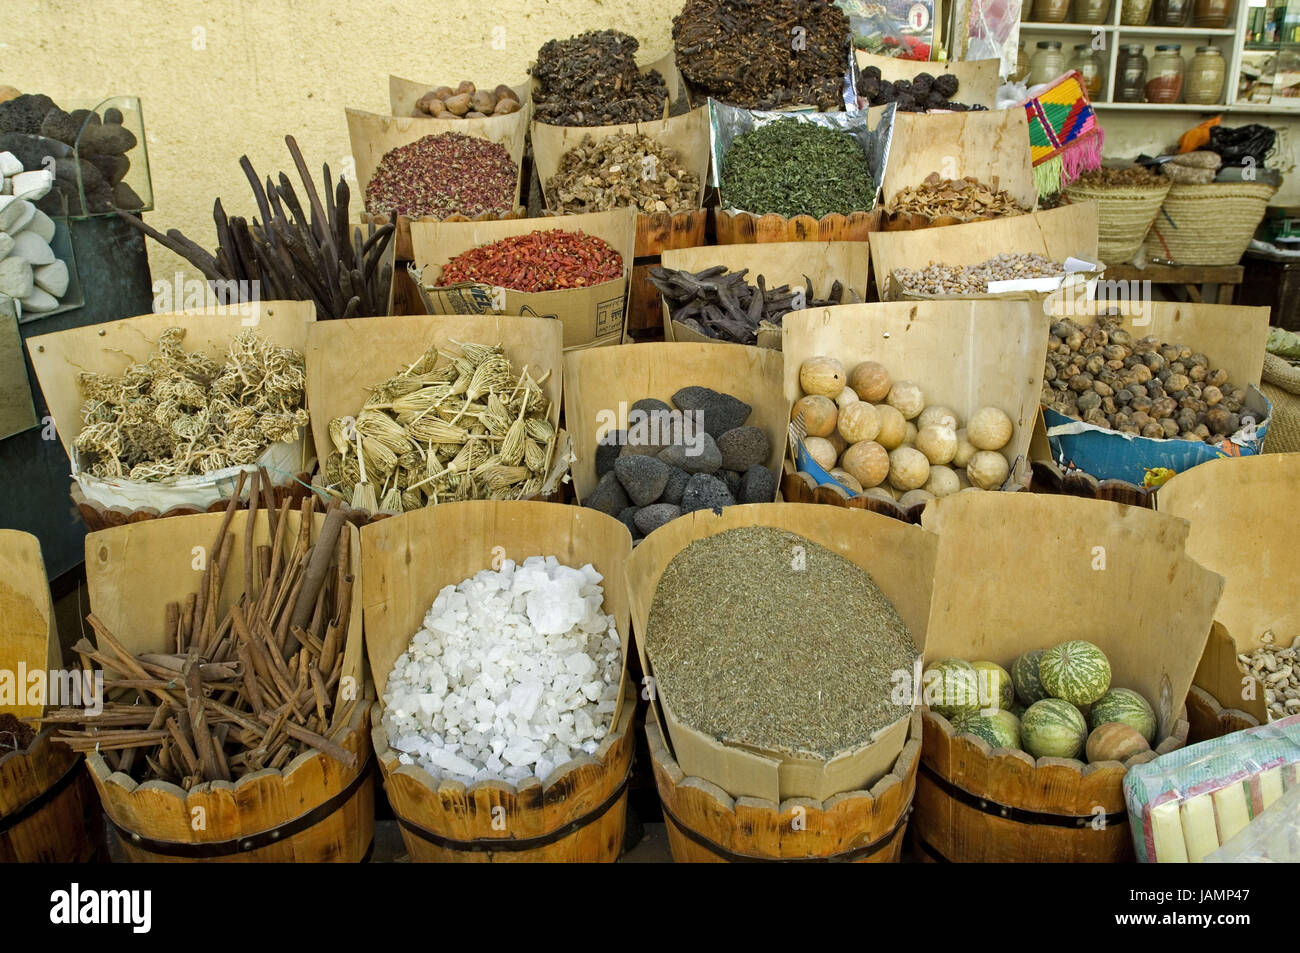 Egypt,Aswan,Souk,loading,food, Stock Photo